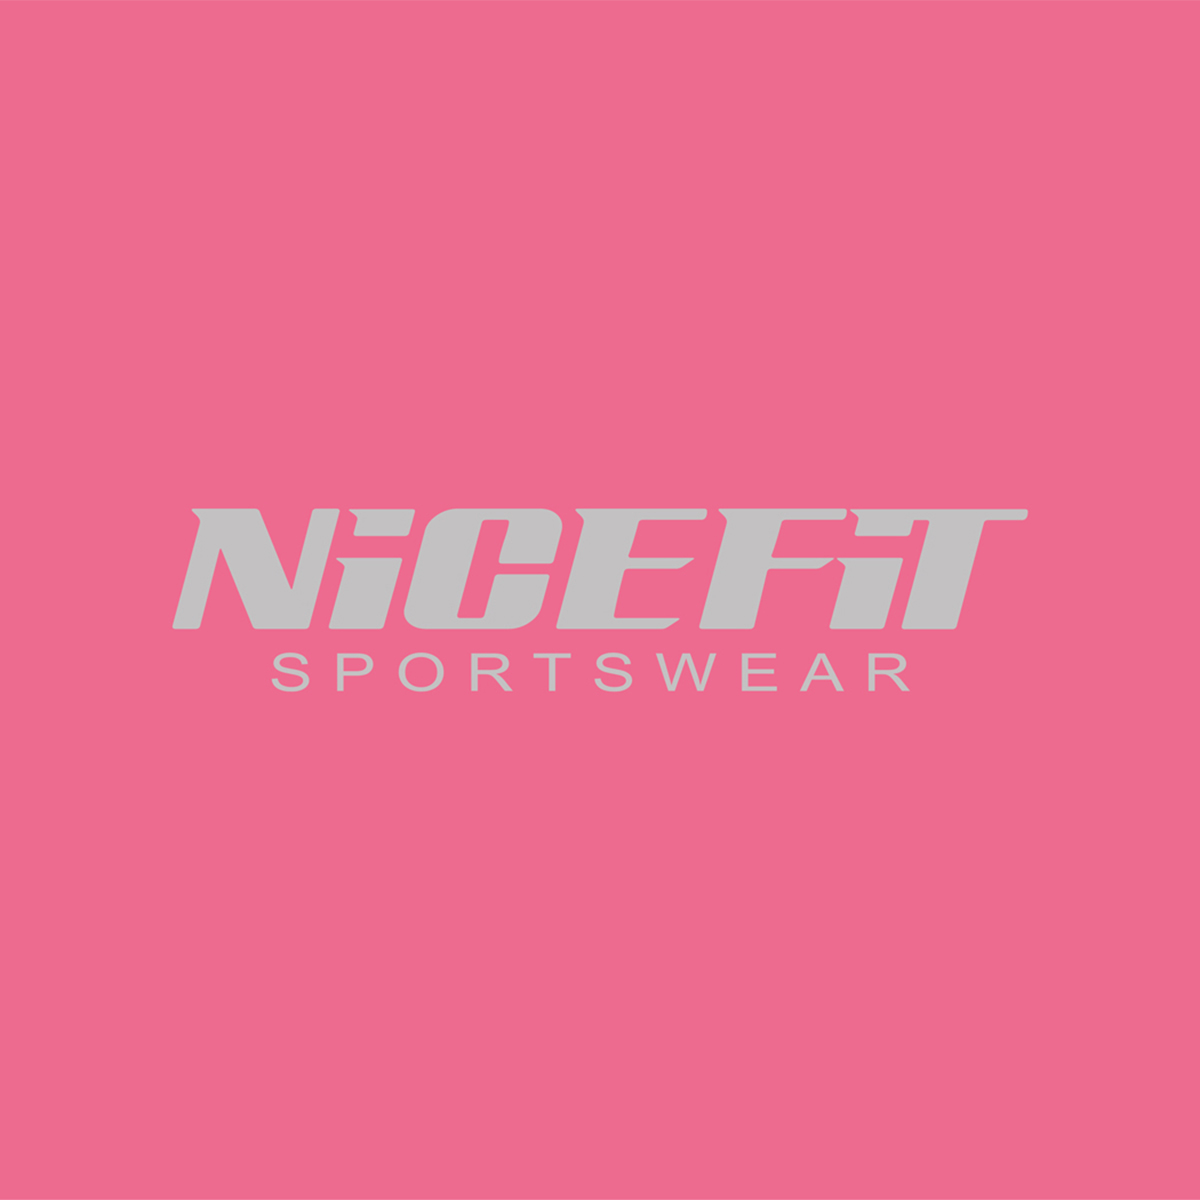 Nicefit sportswear logo